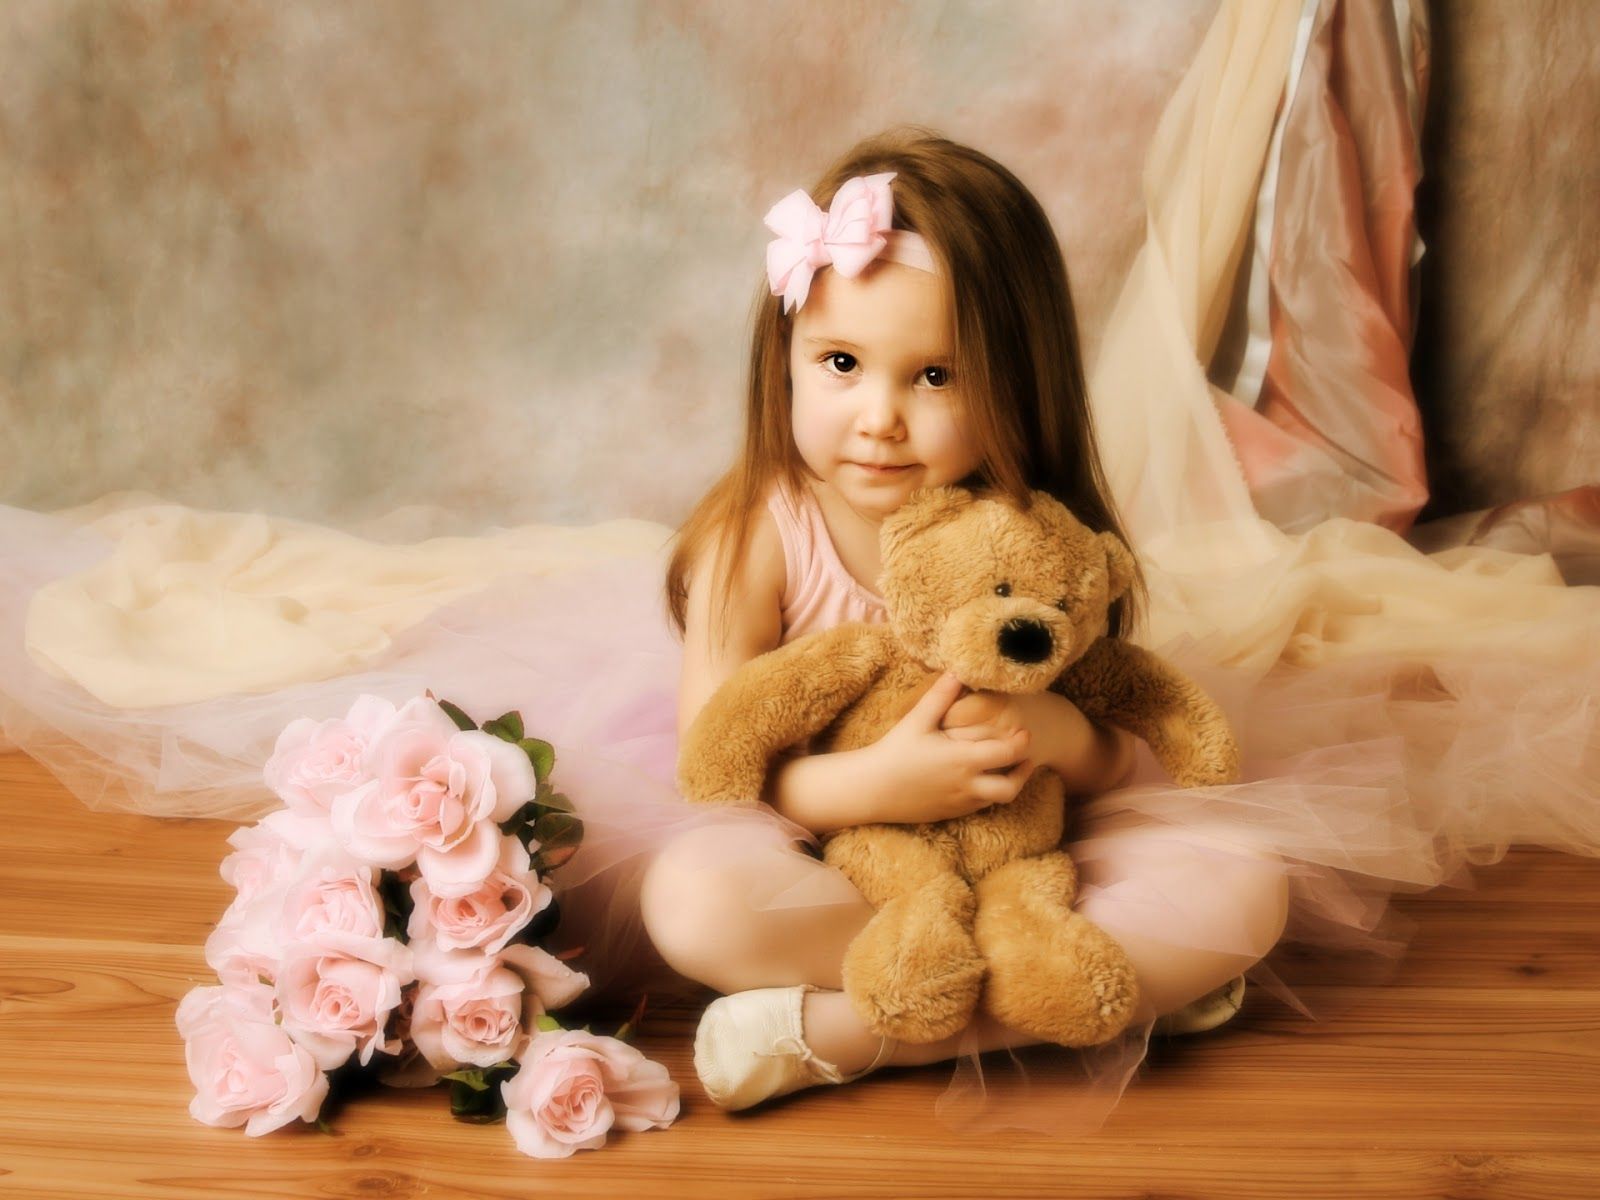 Little girl hugging a teddy bear.